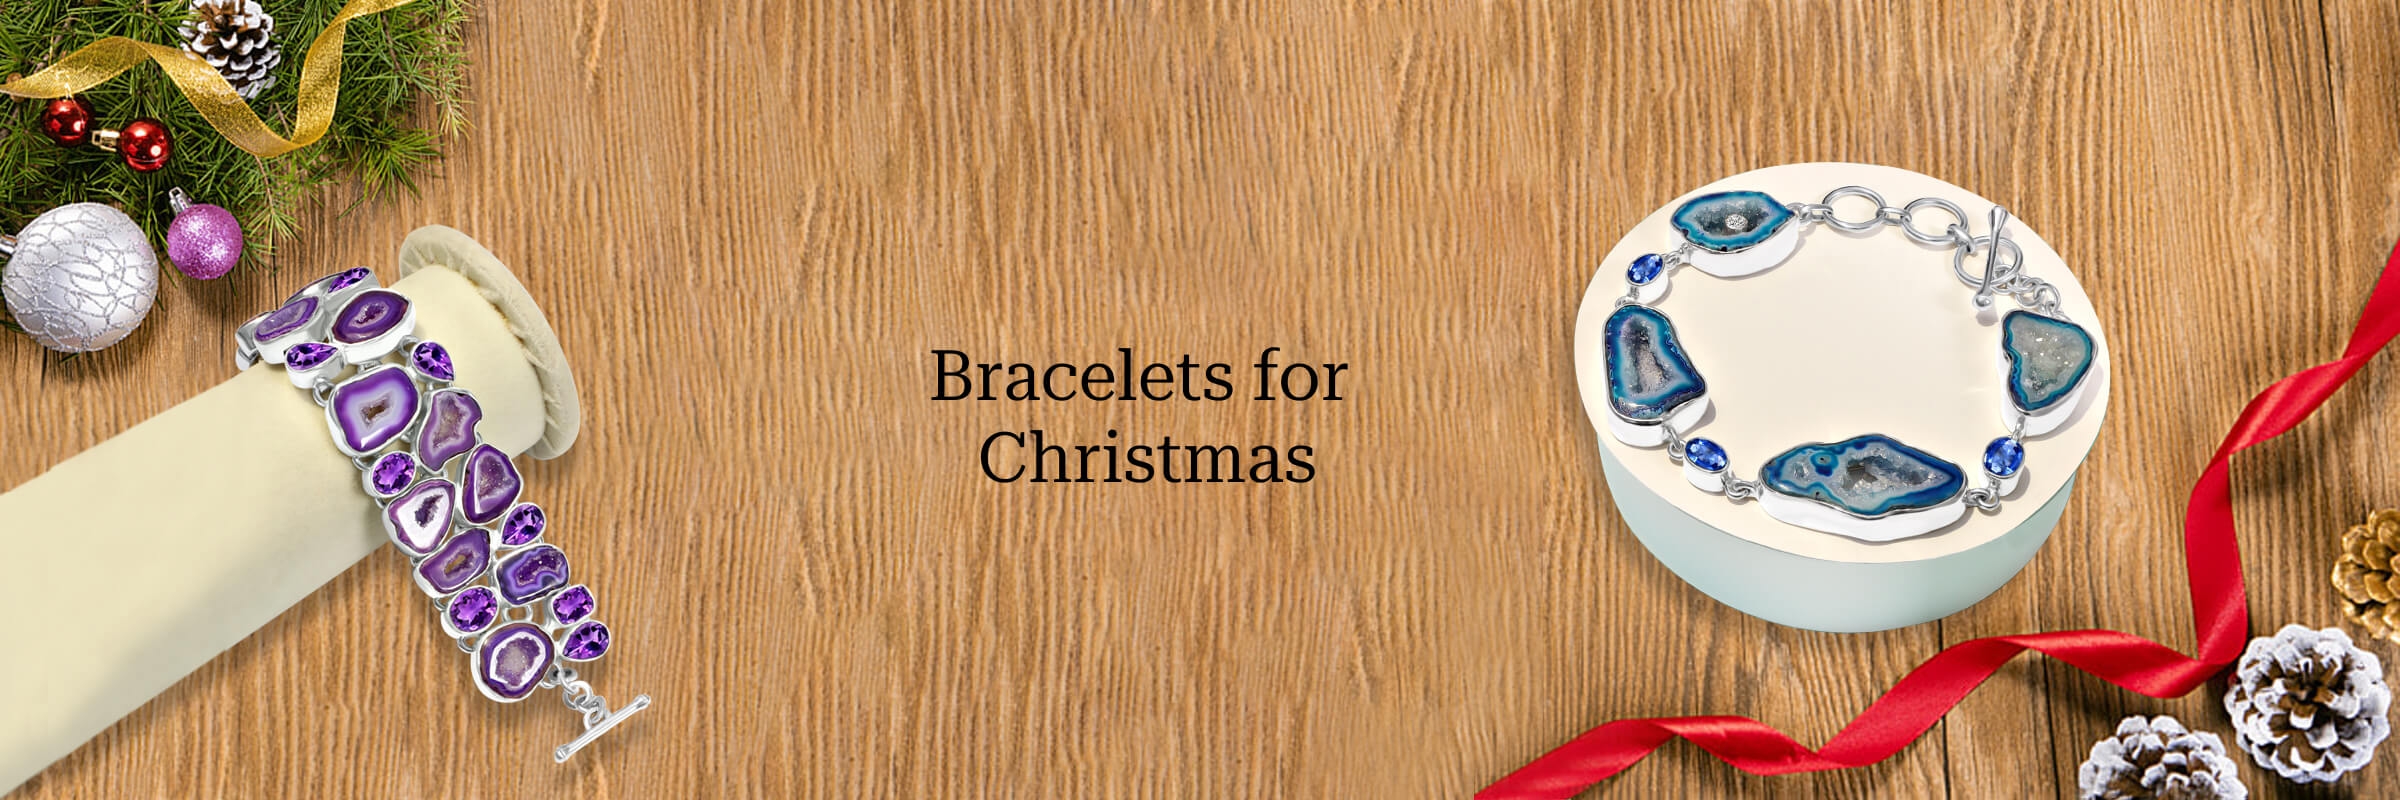 Bracelets as Christmas Gifts